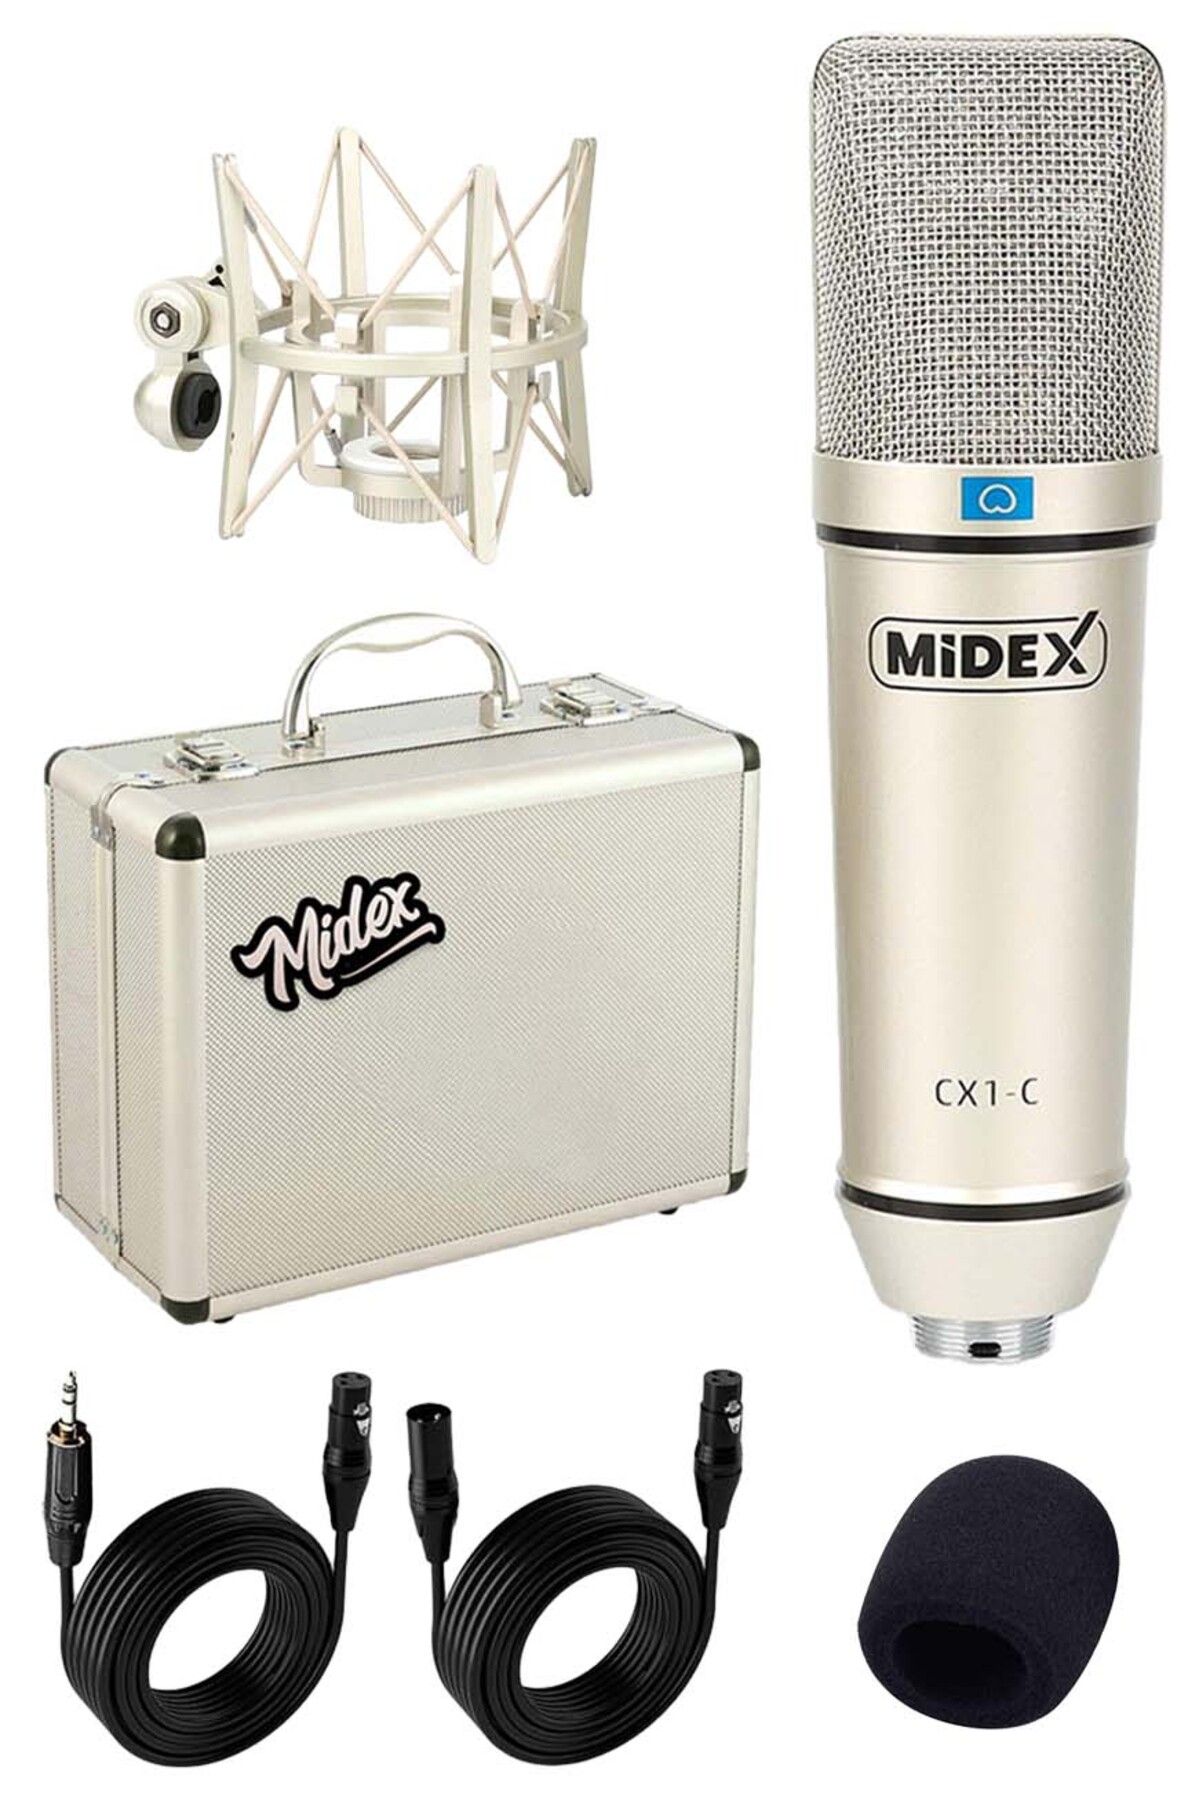 Midex Cx1 Profesyonel Condenser Stüdyo Ses Kayıt Mikrofon Seti Hardcase Ile Full Set